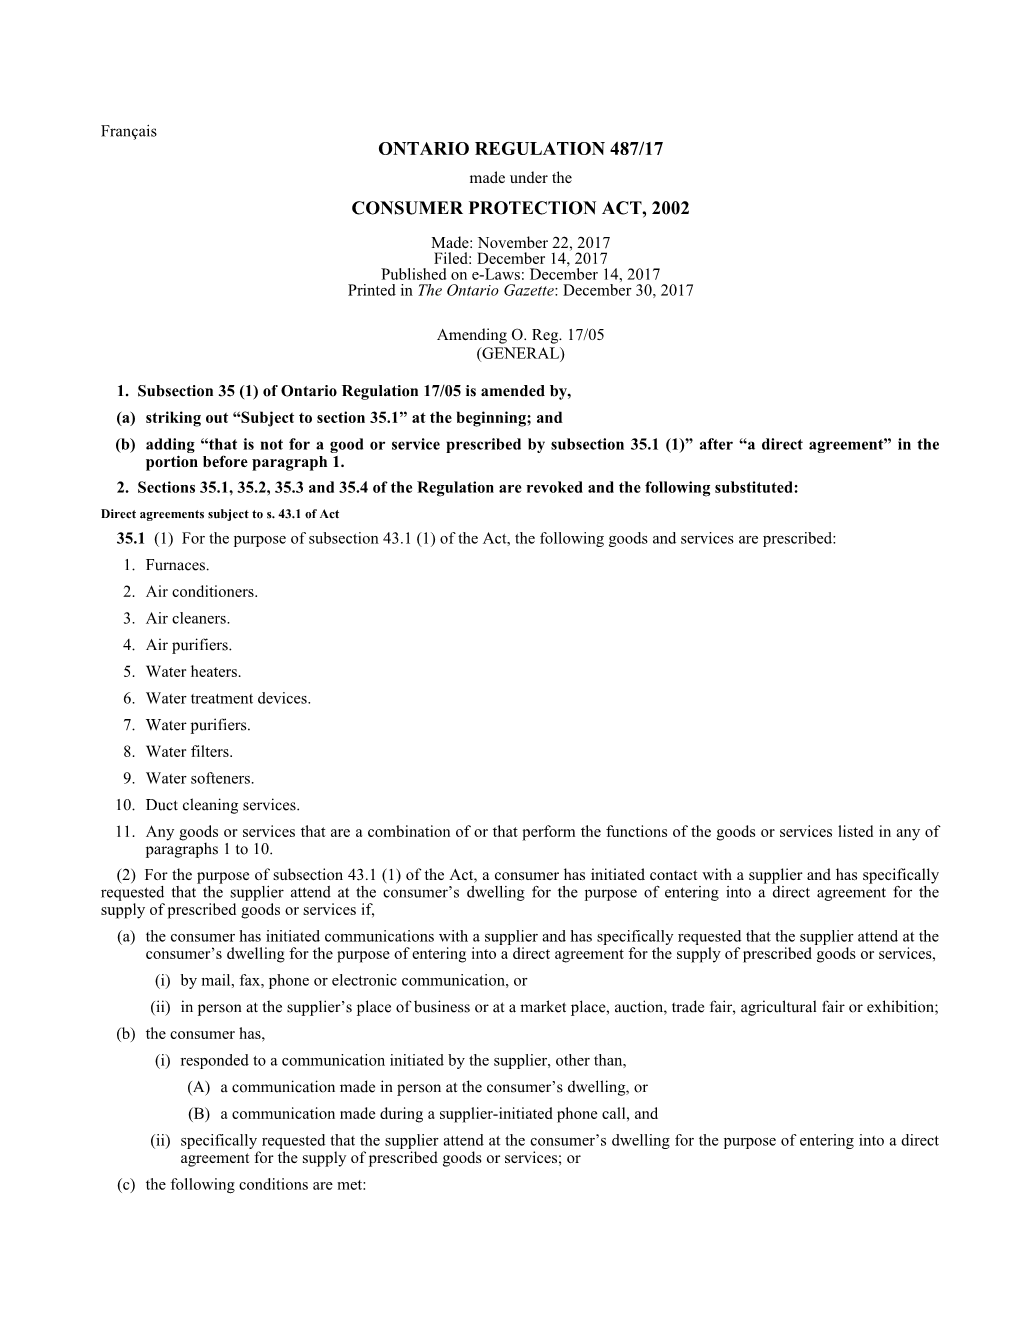 CONSUMER PROTECTION ACT, 2002 - O. Reg. 487/17